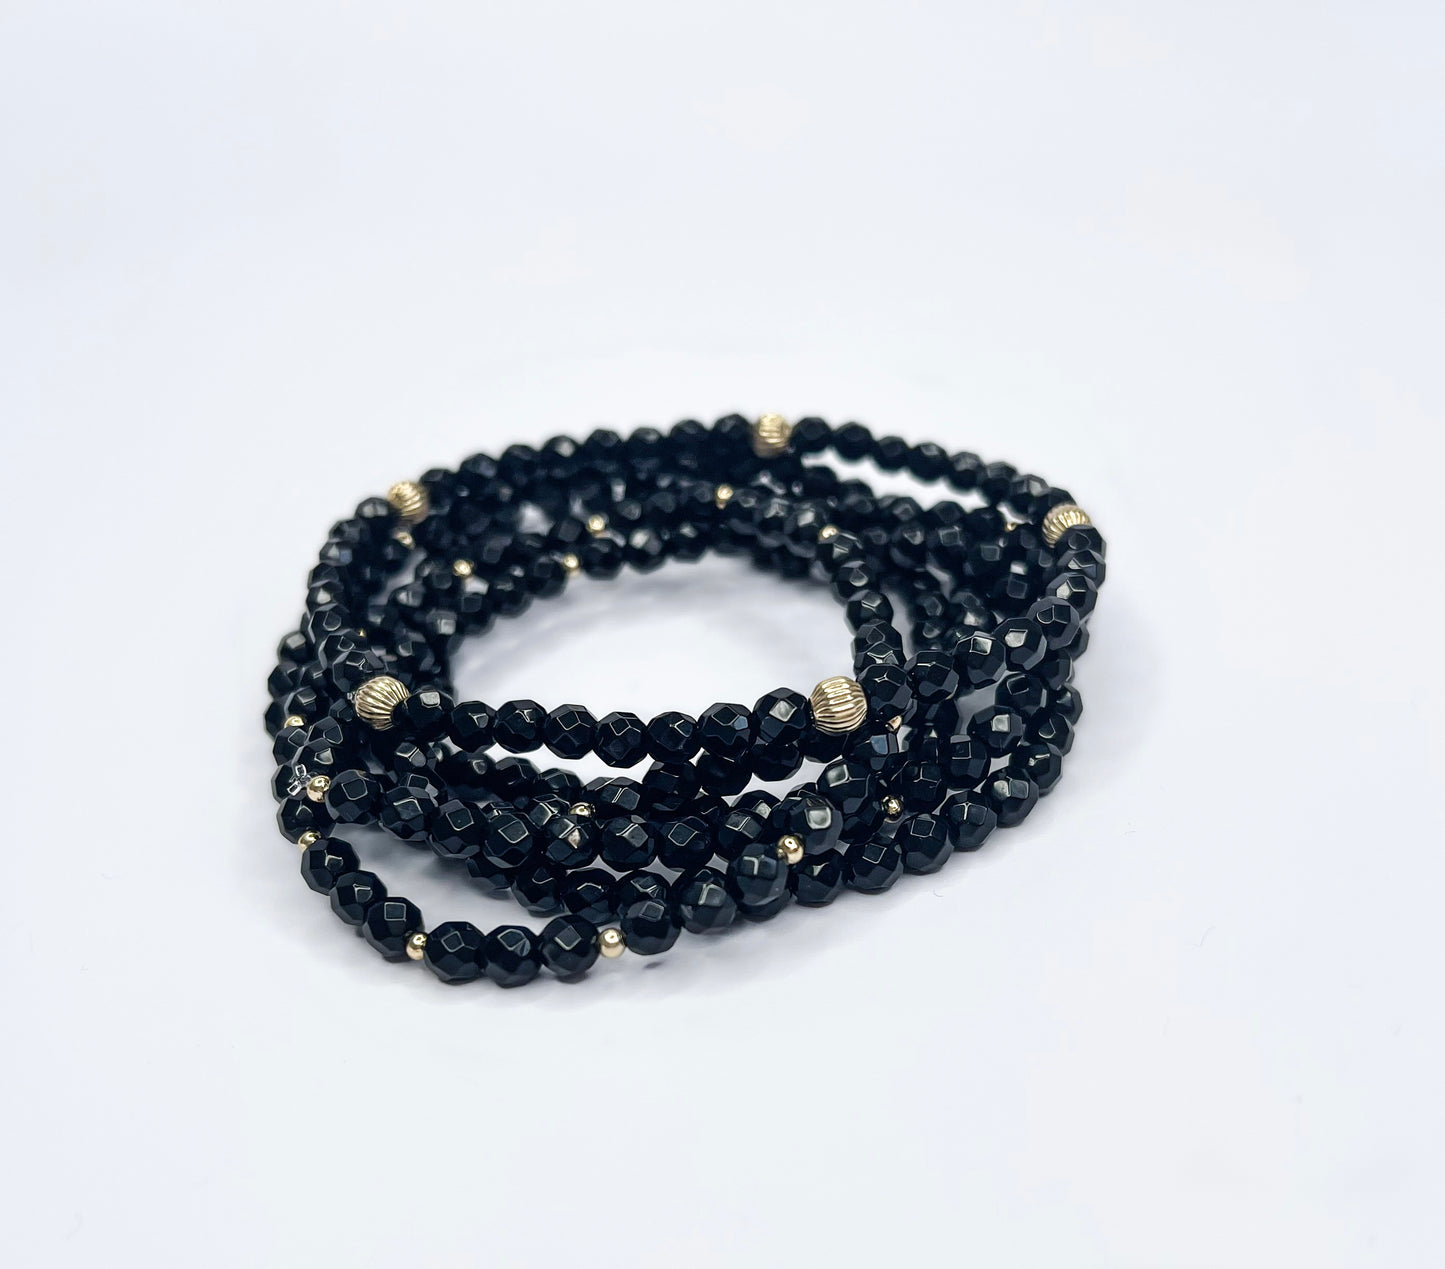 Black onyx, gold spacers beads bracelet